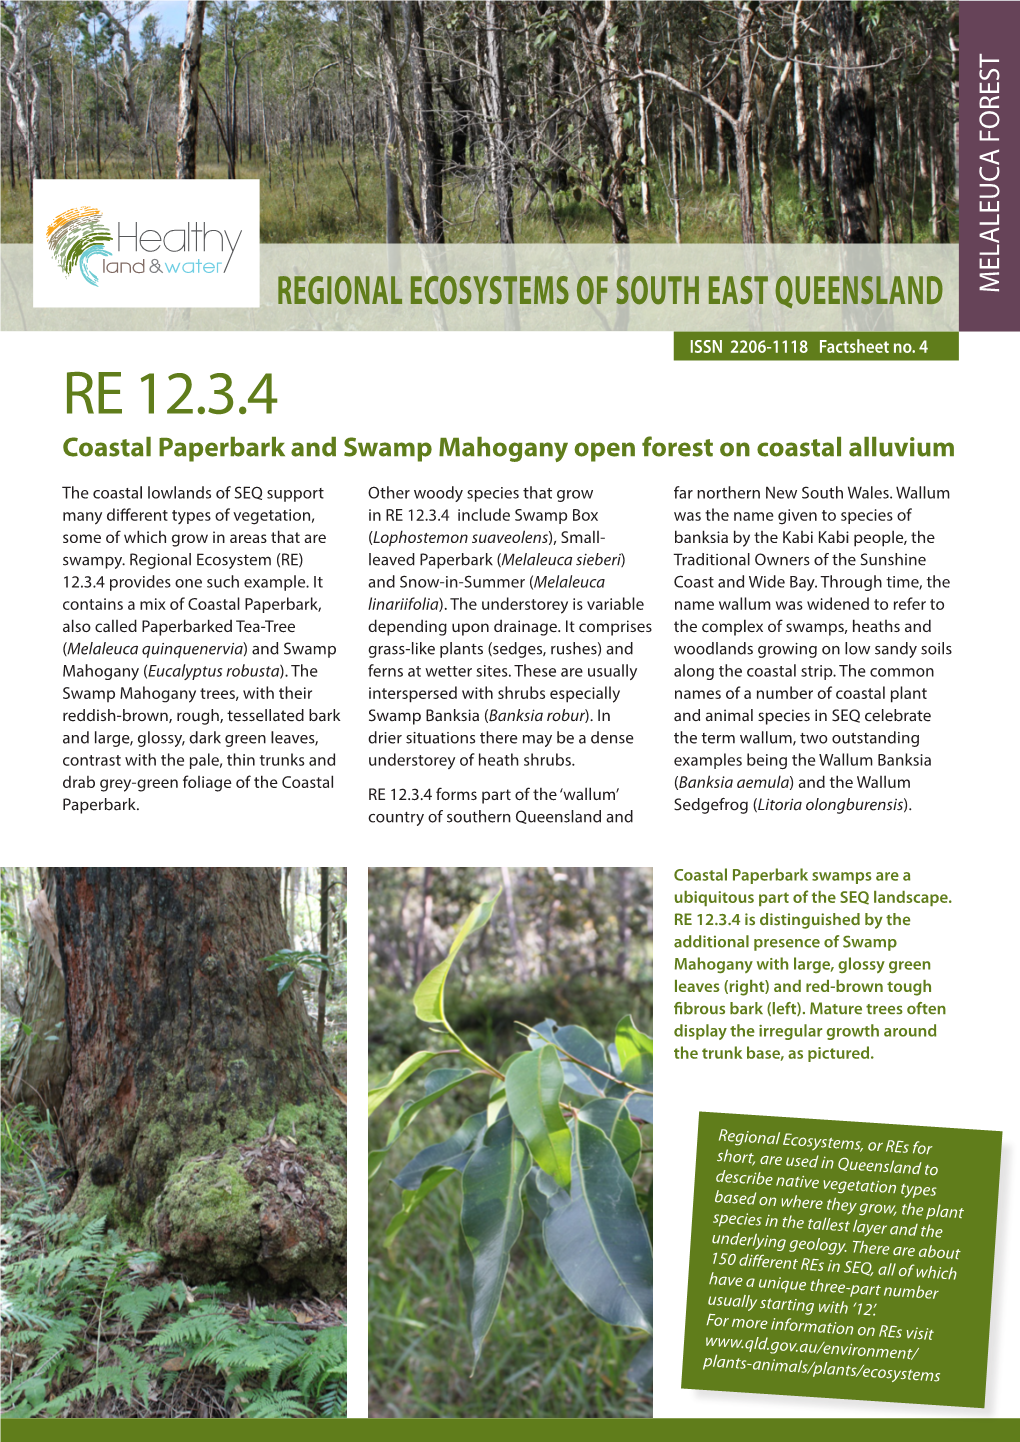 RE 12.3.4 Coastal Paperbark and Swamp Mahogany Open Forest on Coastal Alluvium